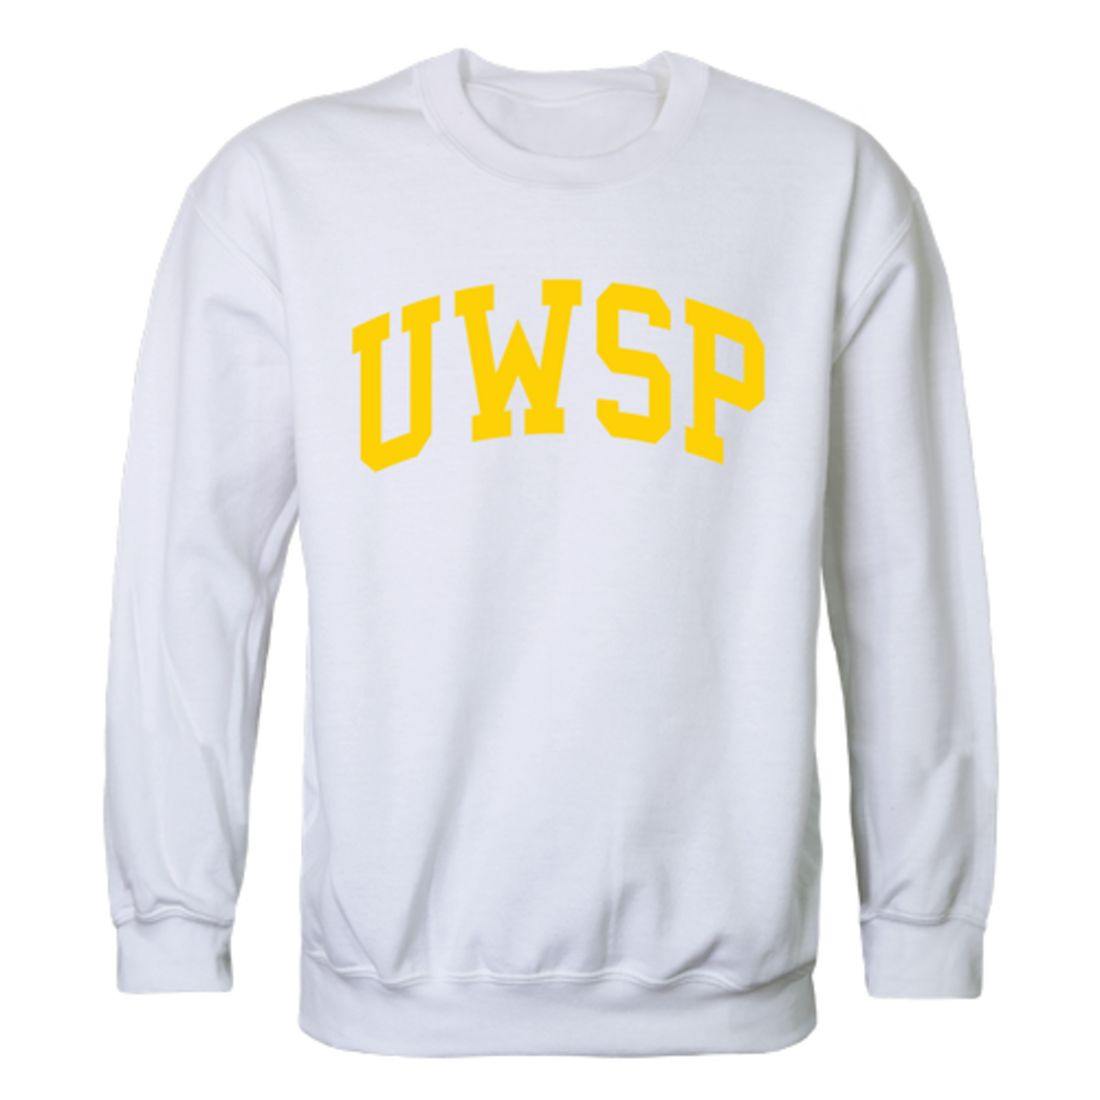 UWSP University of Wisconsin Stevens Point Pointers Arch Crewneck Pullover Sweatshirt Sweater White-Campus-Wardrobe